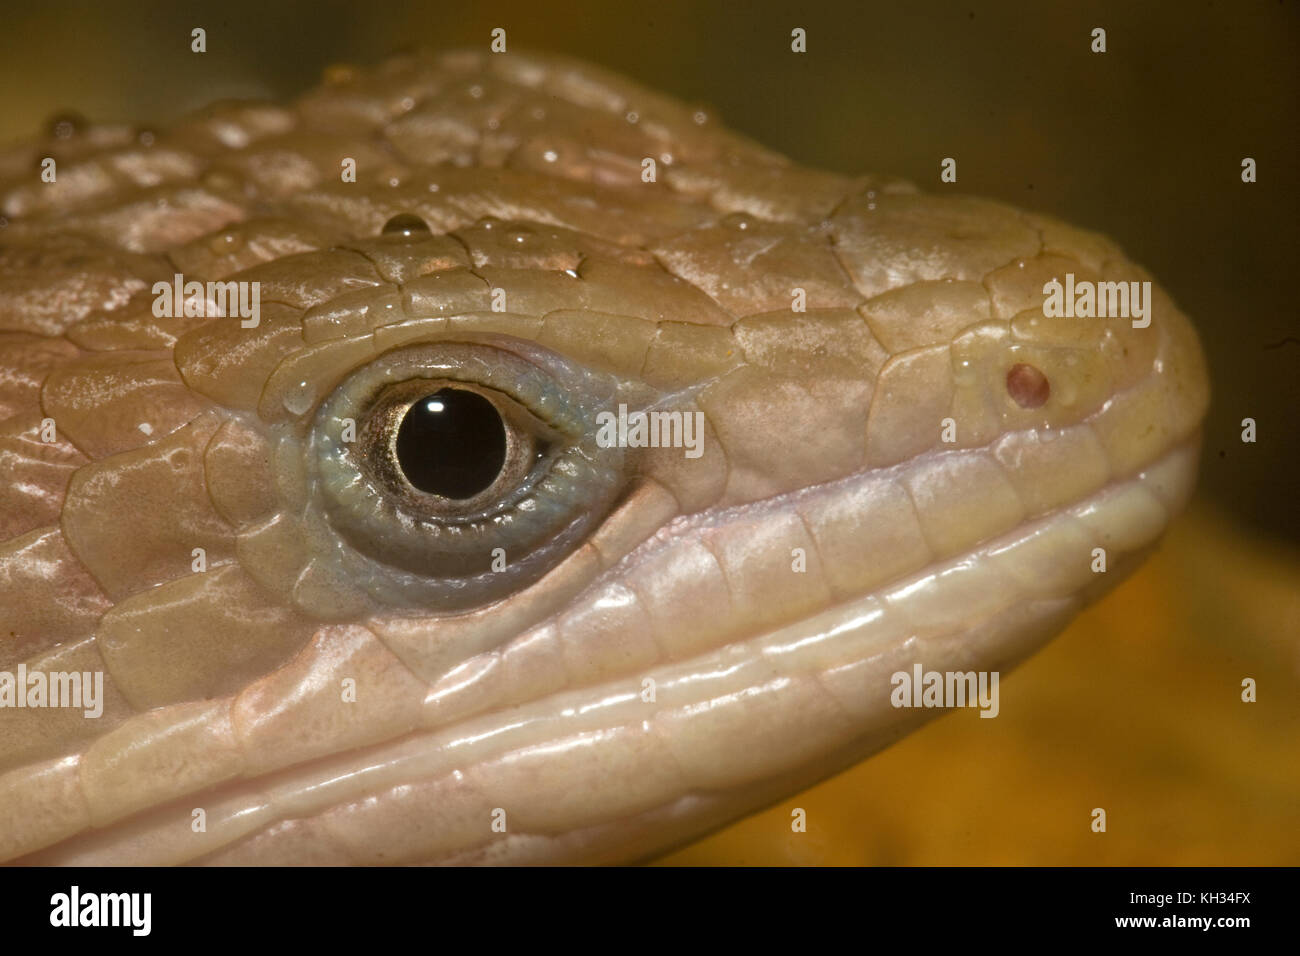 Texas Alligator Lizard, Gerrhonotus liocephalus Stock Photo